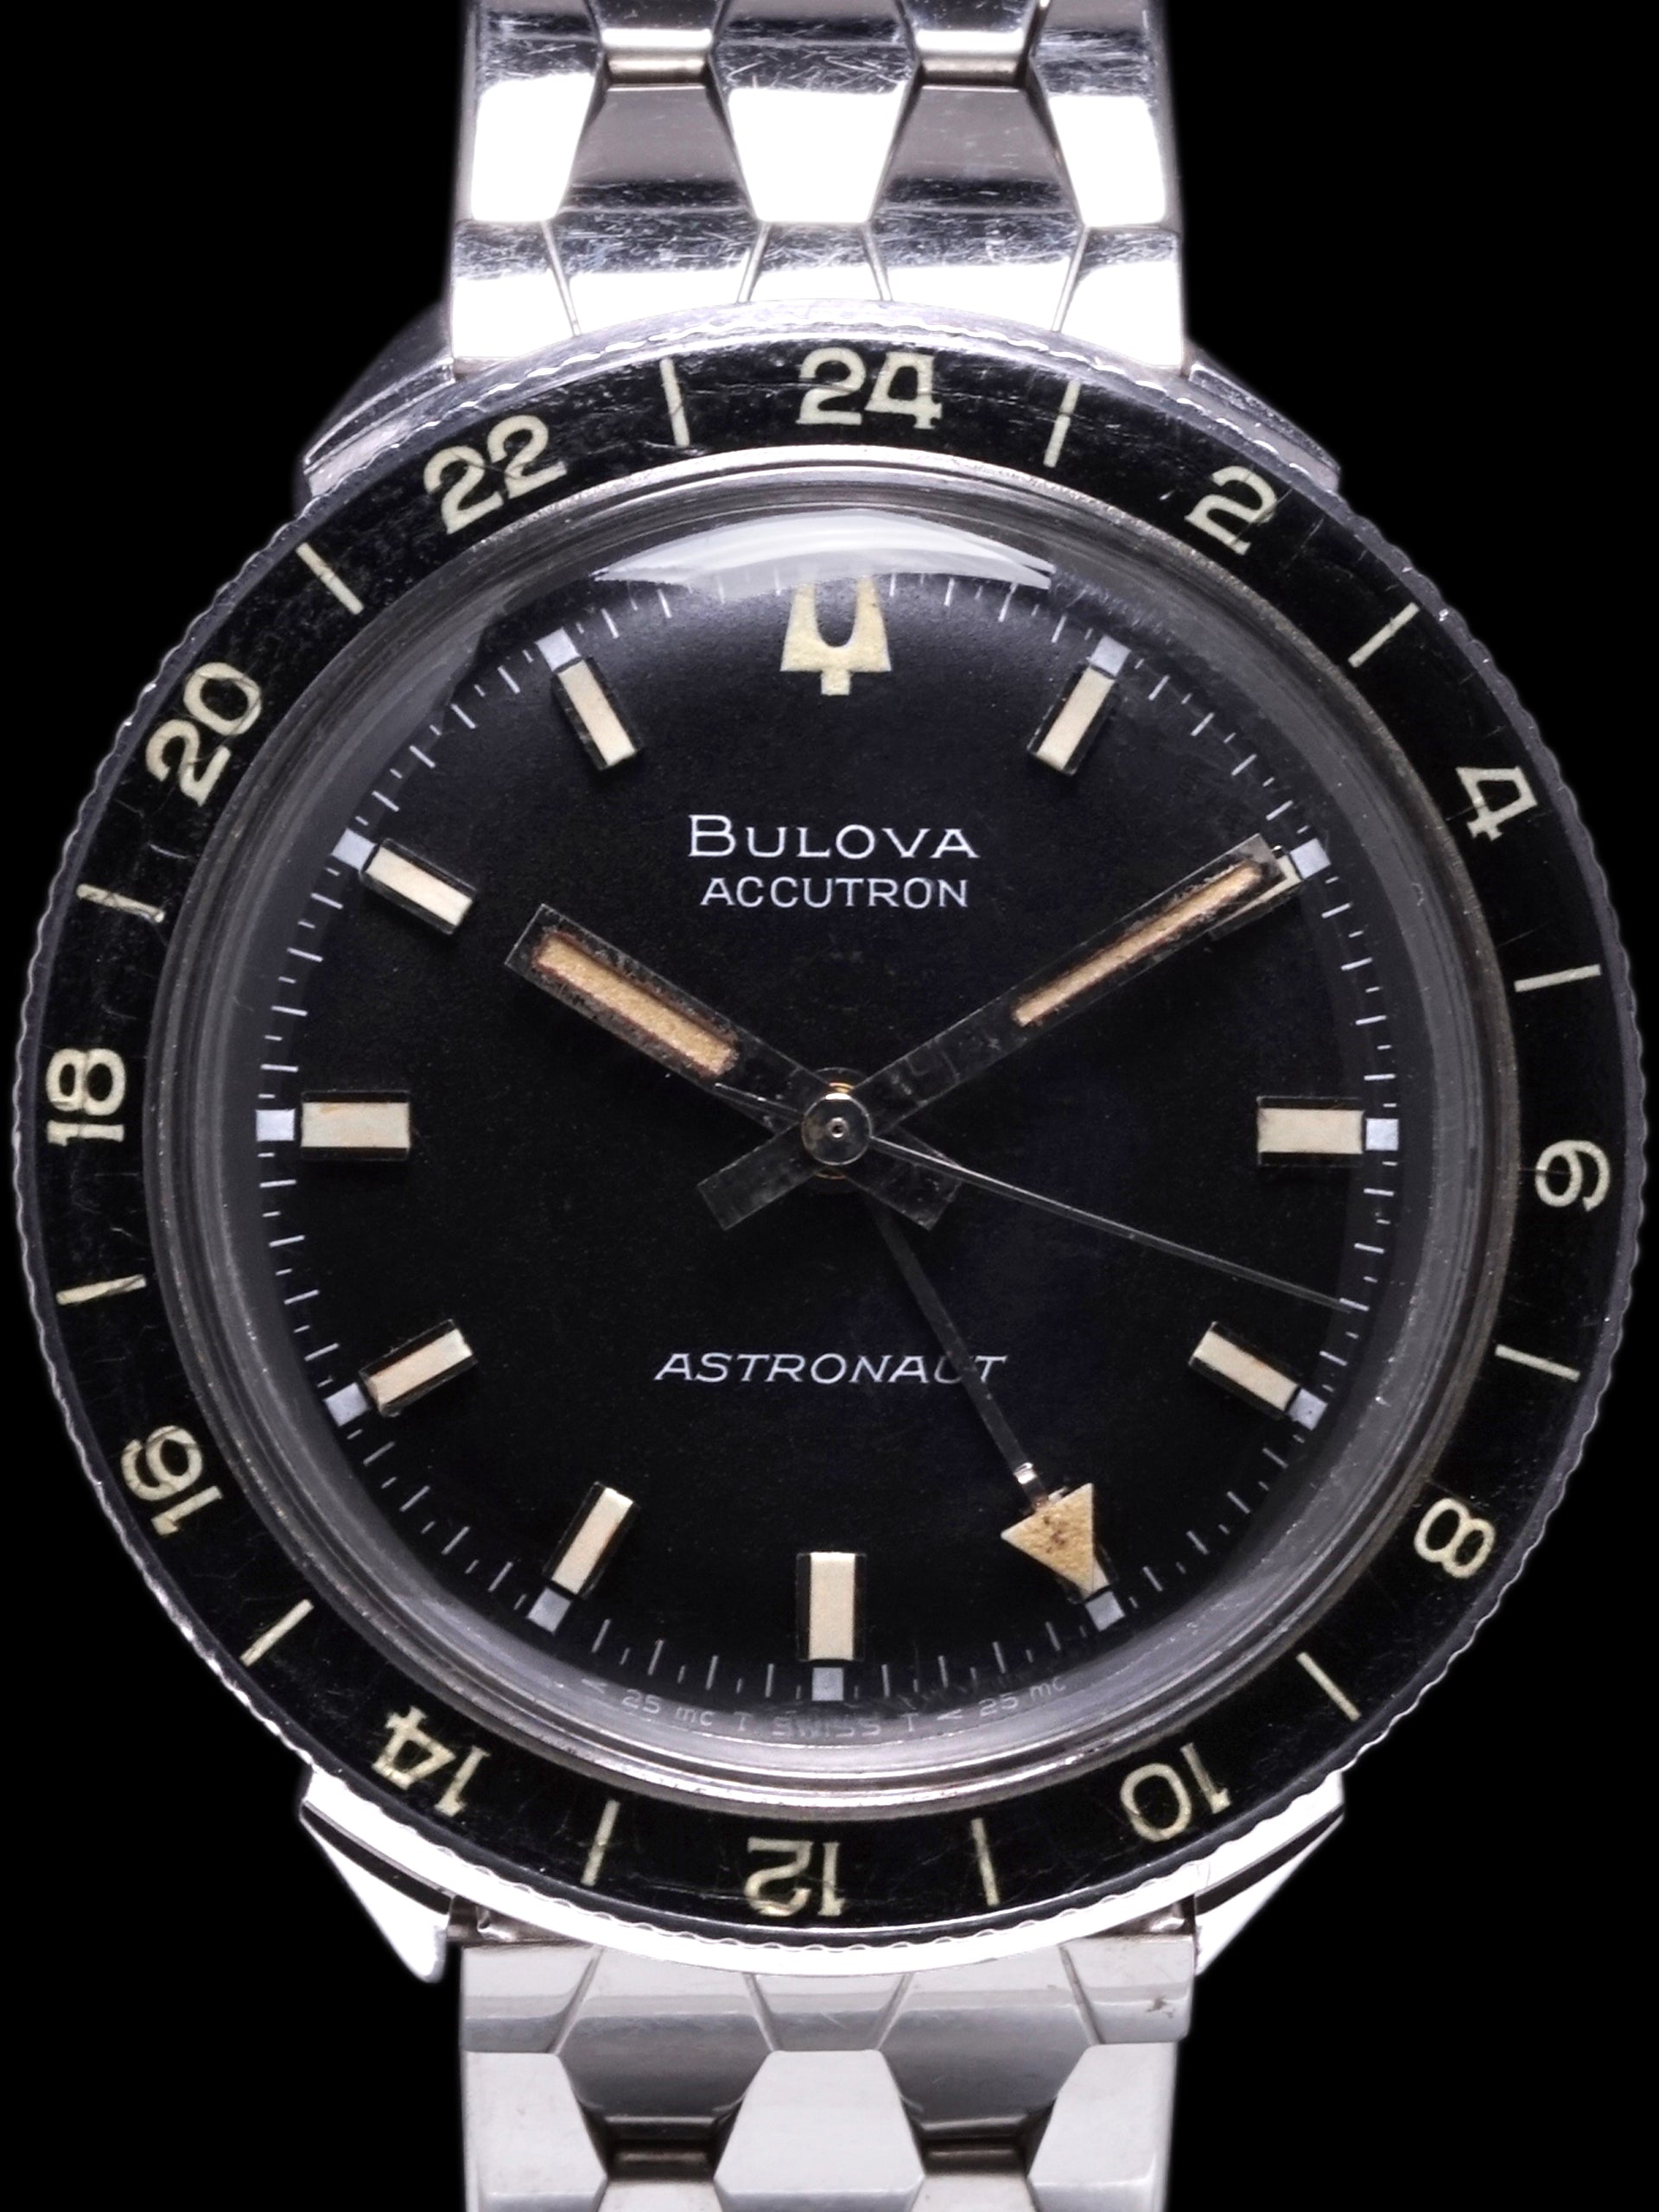 1967 Bulova Accutron Astronaut GMT (Ref. 546-2) "Type 4"